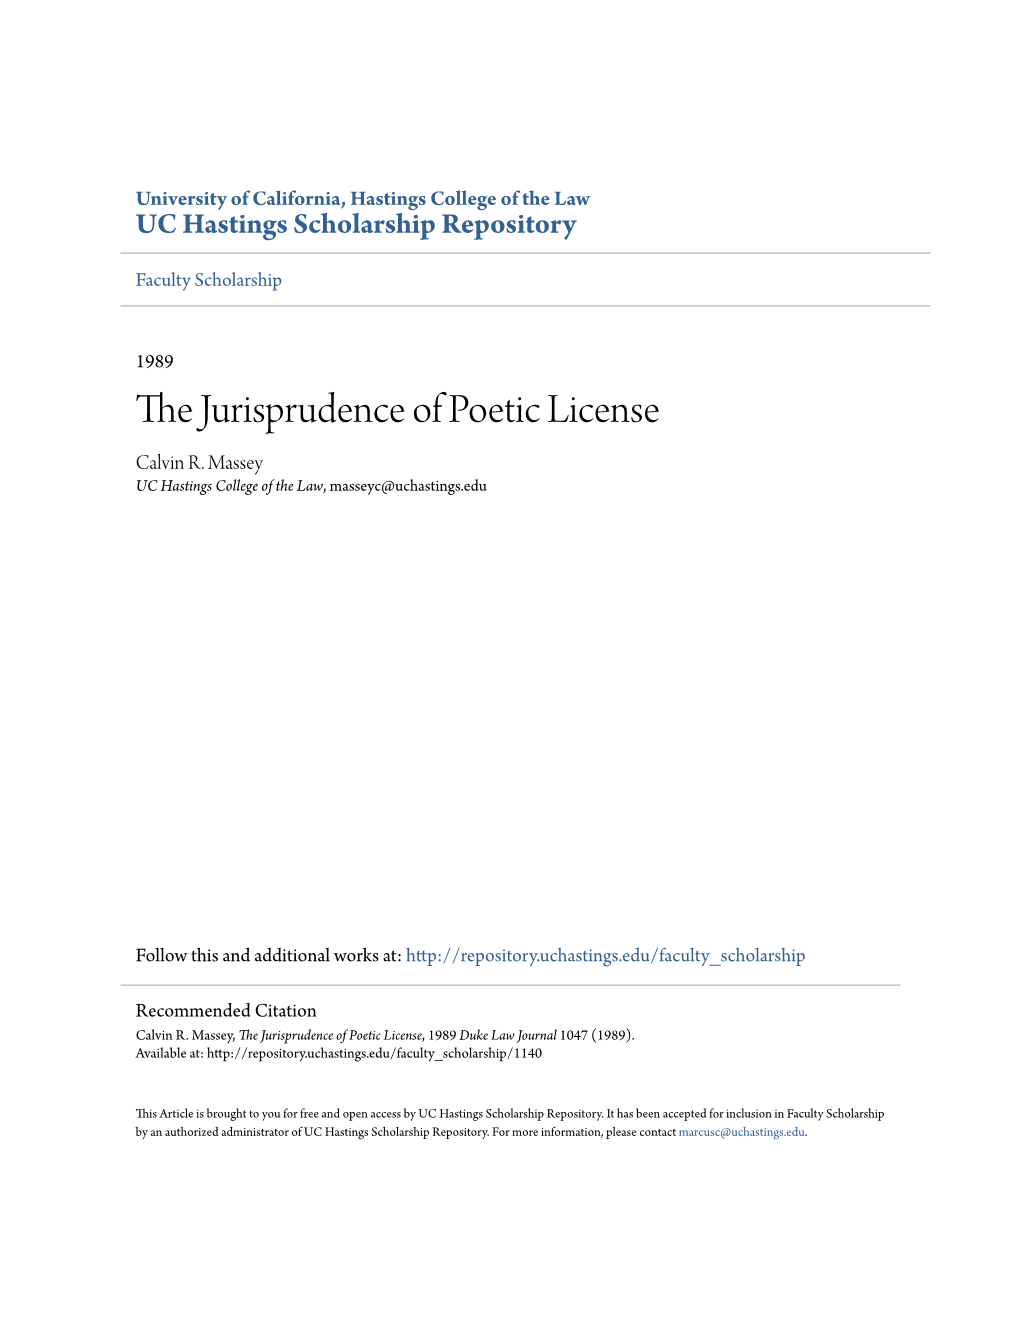 The Jurisprudence of Poetic License, 1989 Duke Law Journal 1047 (1989)